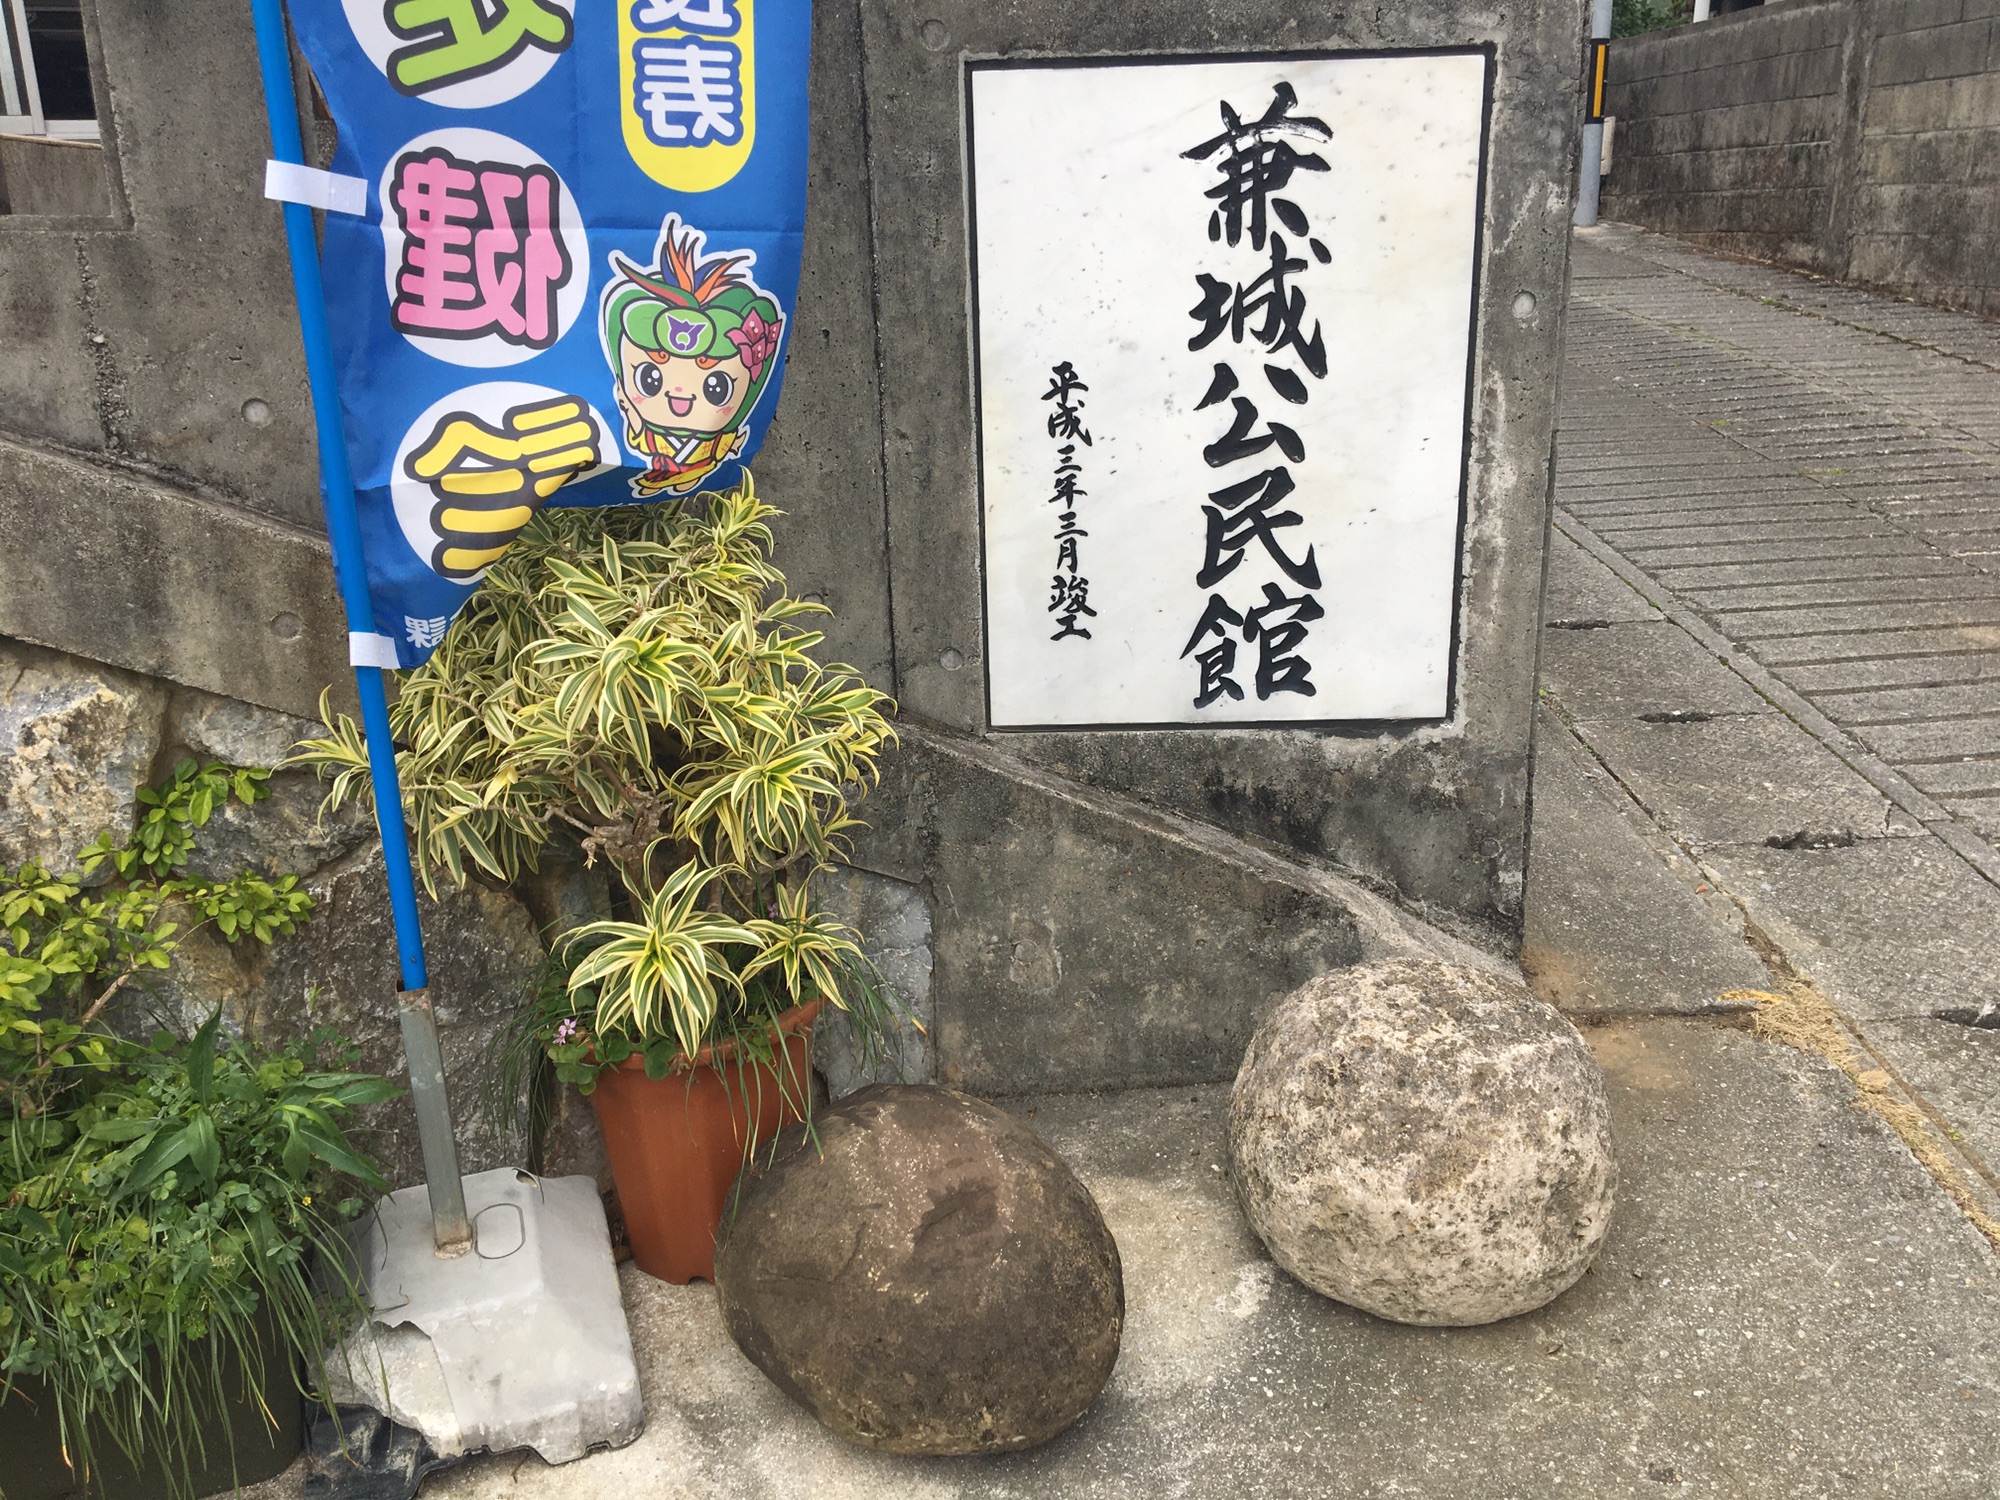 Okinawa 沖縄 #2 Day 5 (22/4/20) 南風原町 (5) Kanegusuku Hamlet 